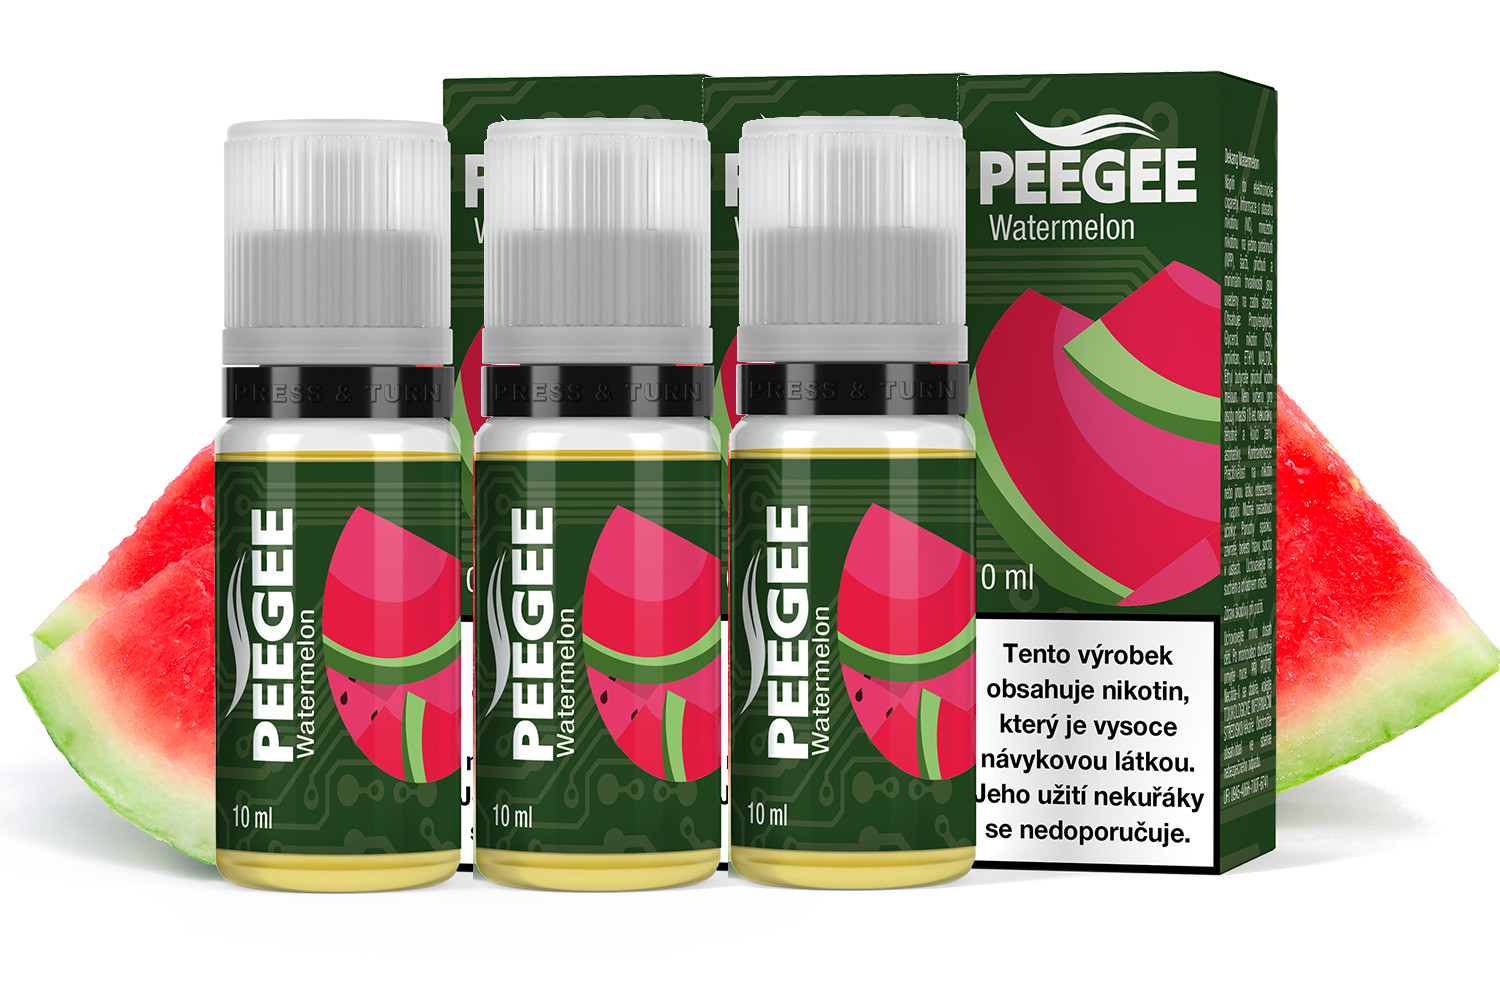 PEEGEE - Vodní meloun (Watermelon) 3x10ml Obsah nikotinu: 12mg